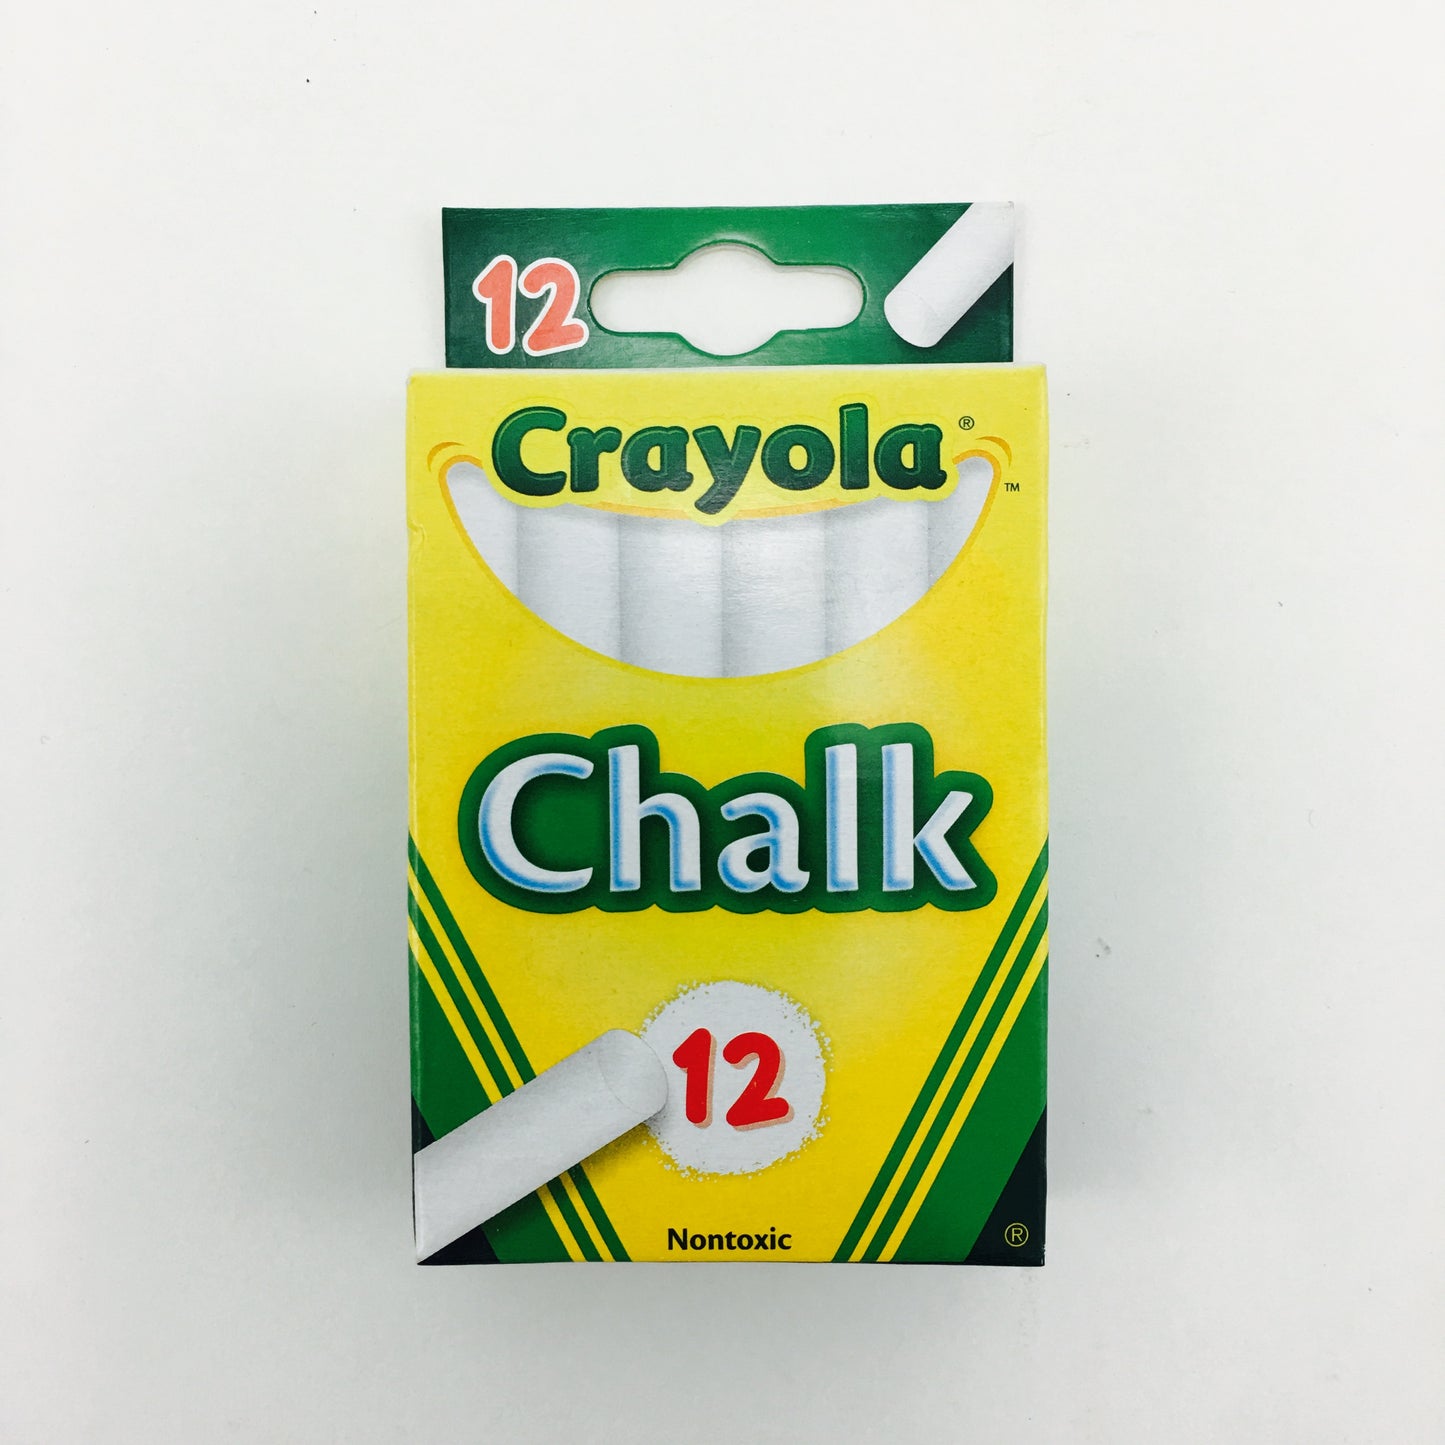 Crayola Chalkboard Chalk Stick Sets - 12/Pack - White by Crayola - K. A. Artist Shop